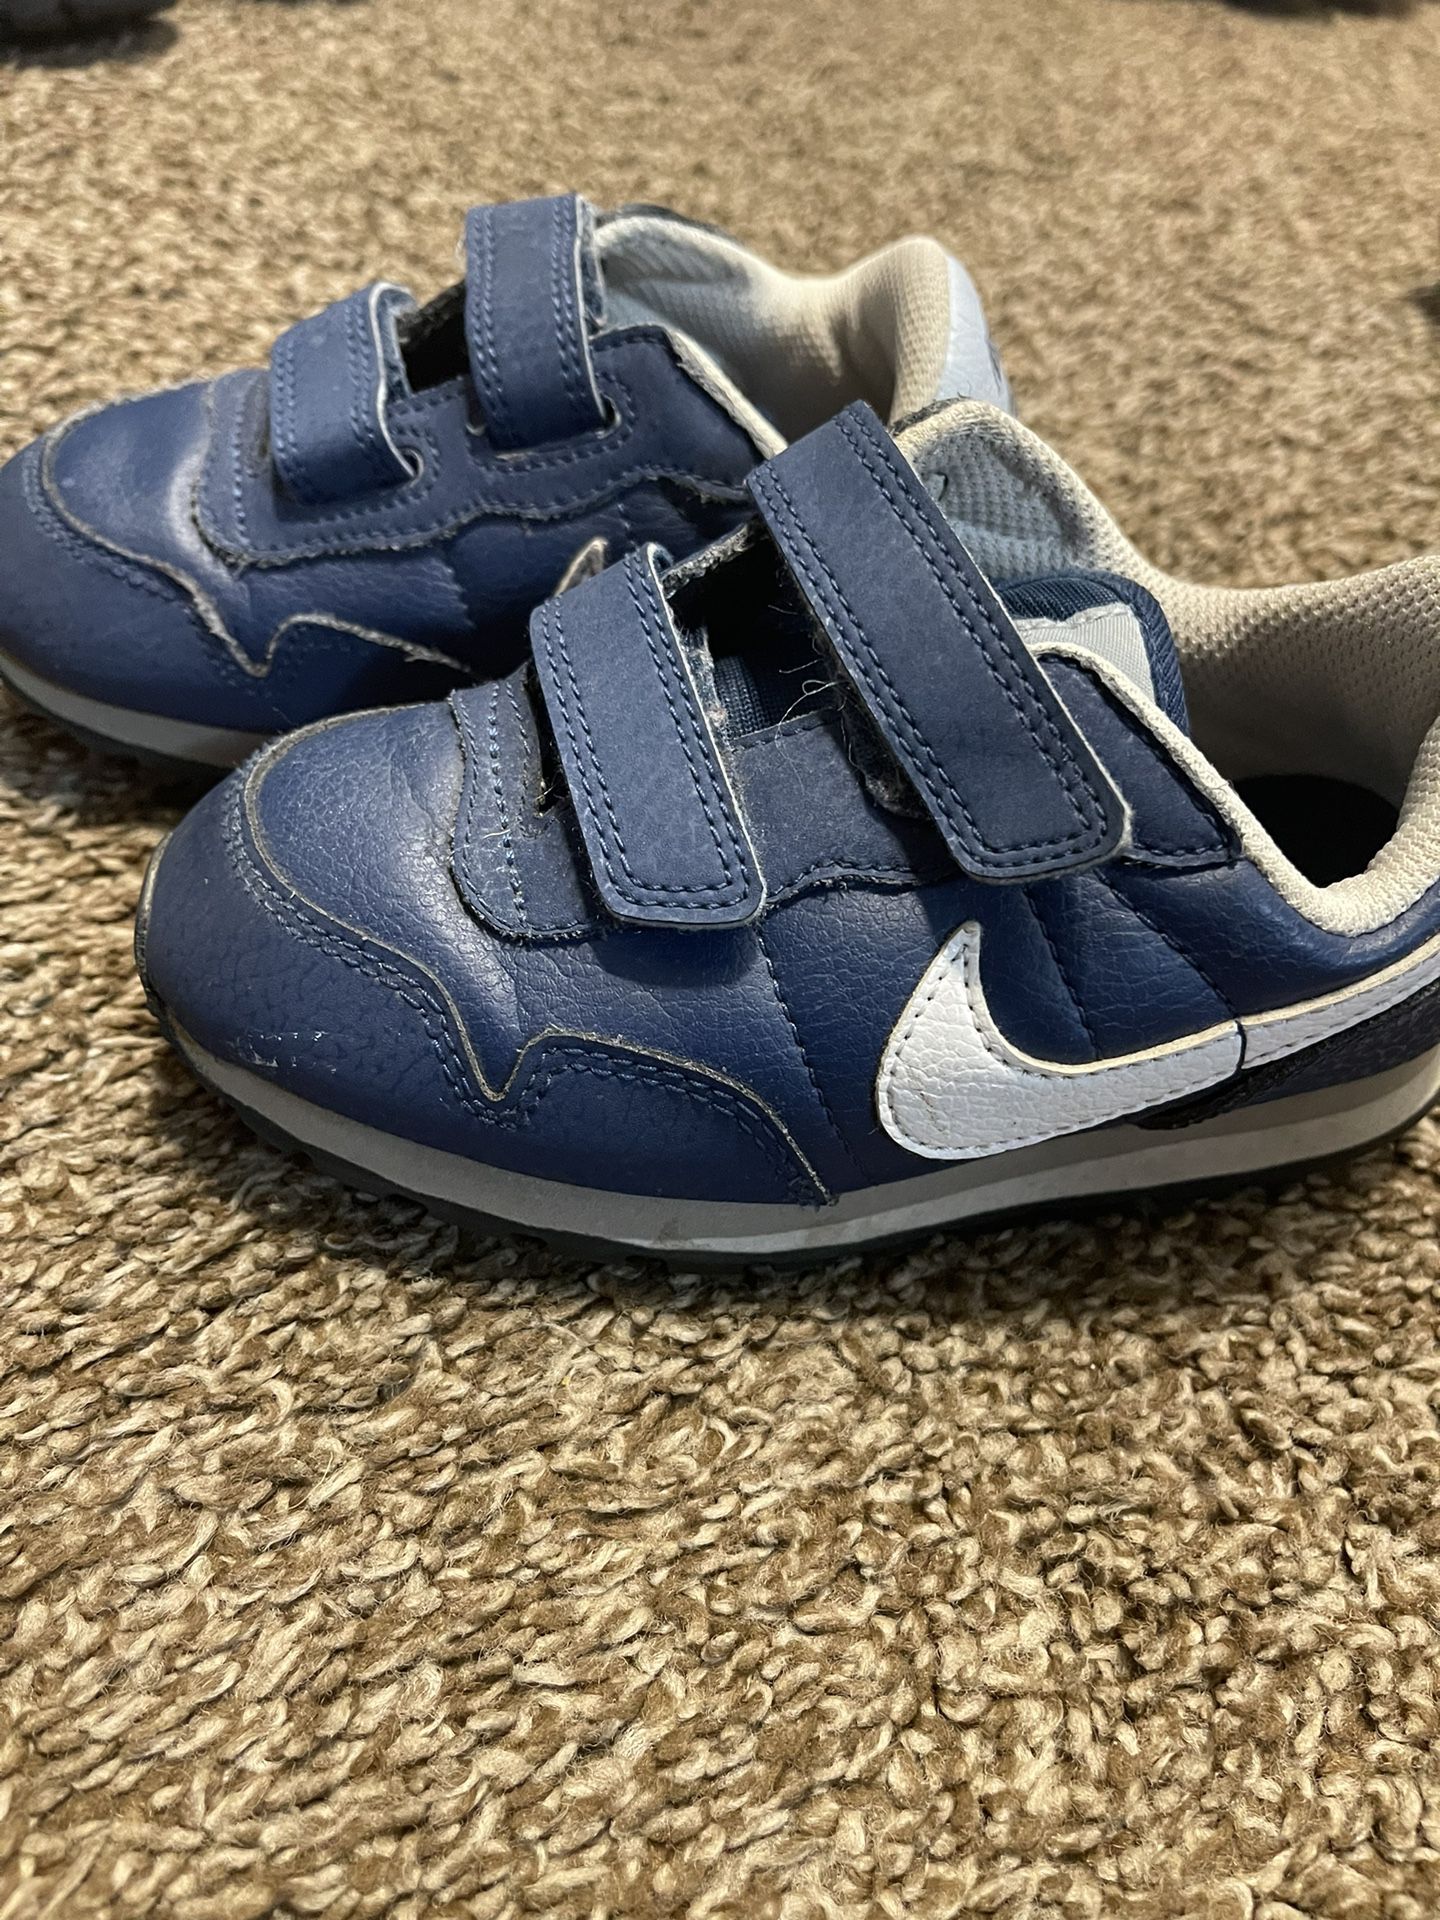 Toddler Nike Shoes Size 9c